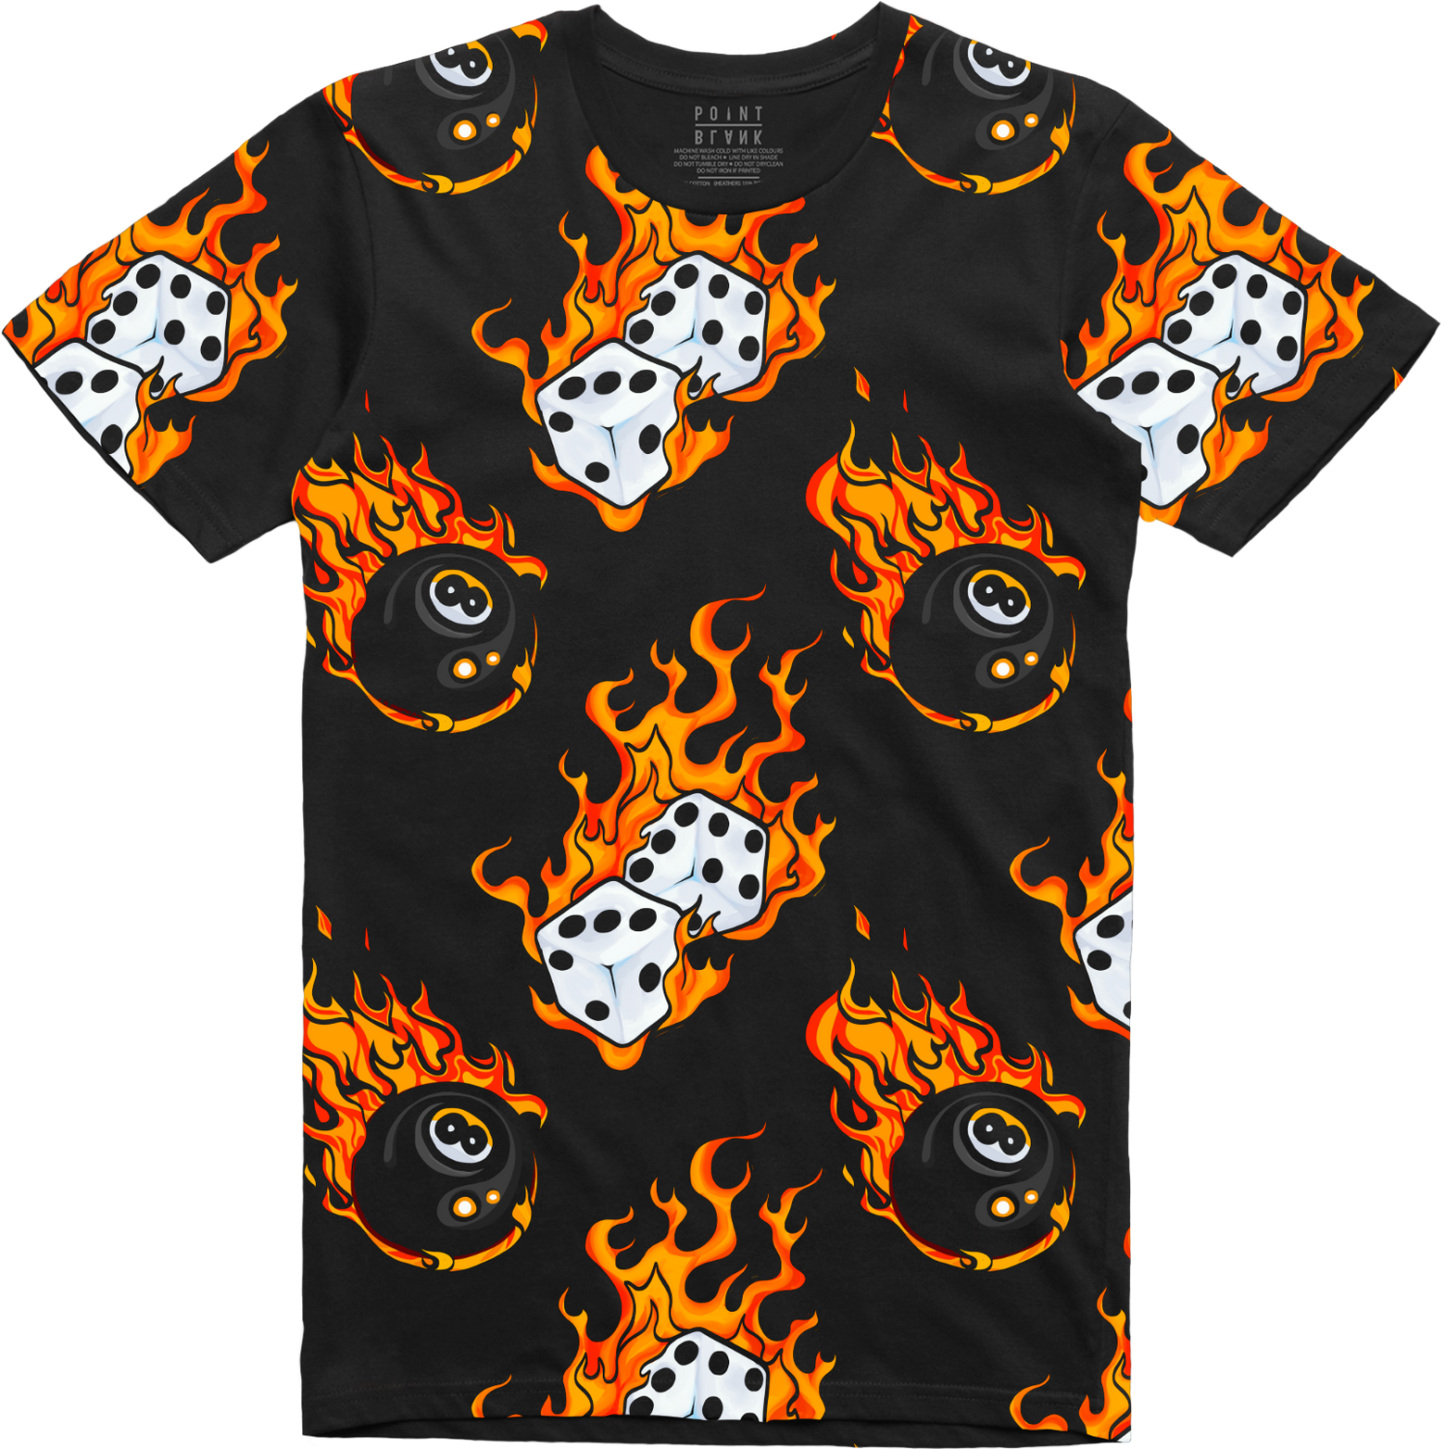 Flames All-Over Print T-Shirt - Black